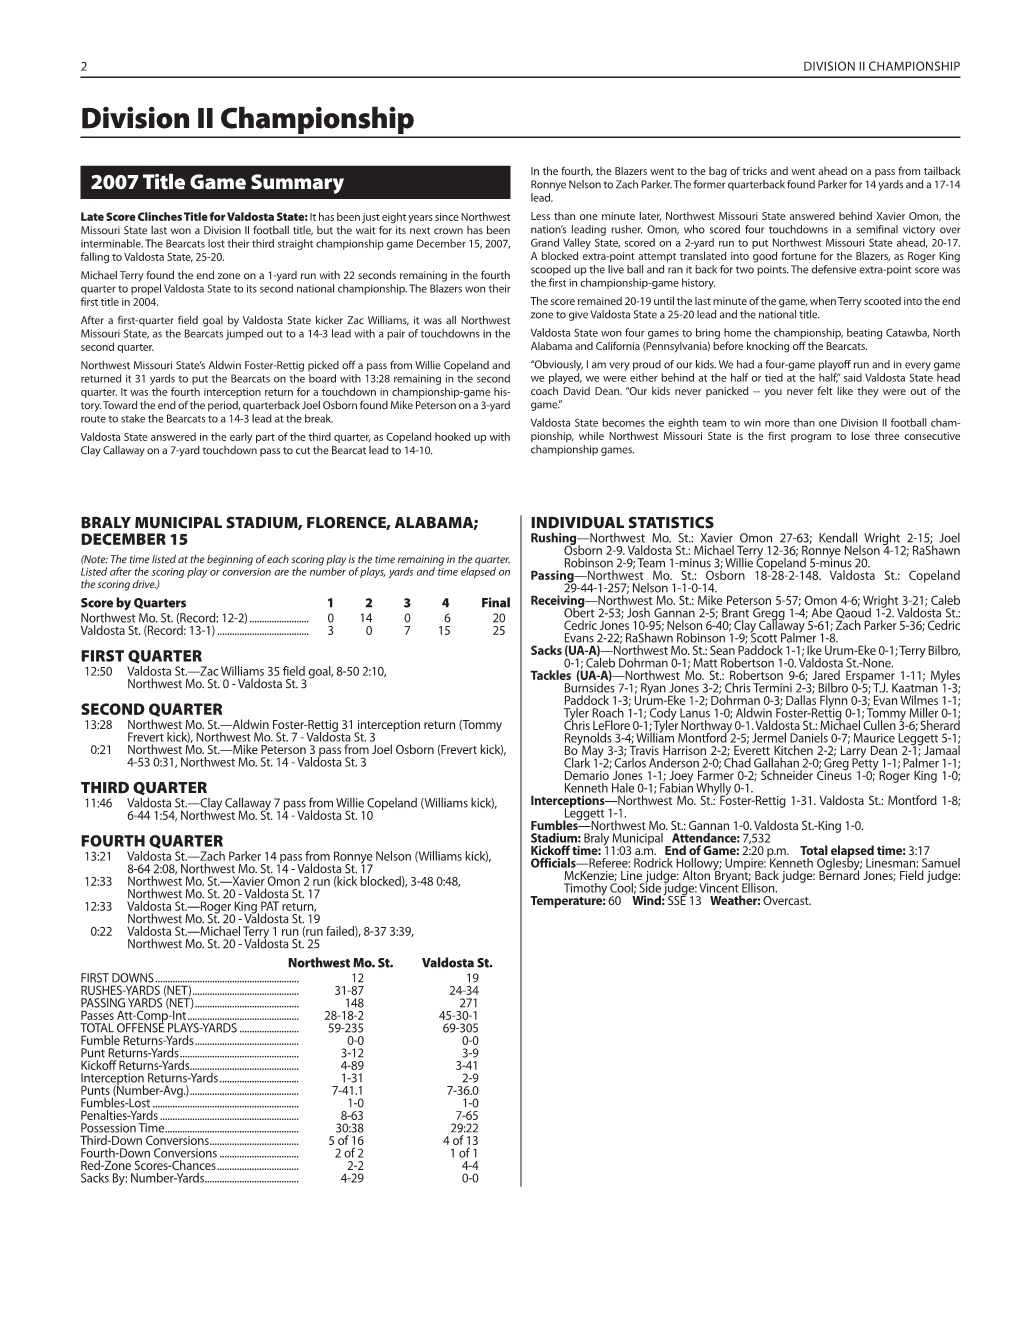 NCAA Division II-III Football Records (Championships)